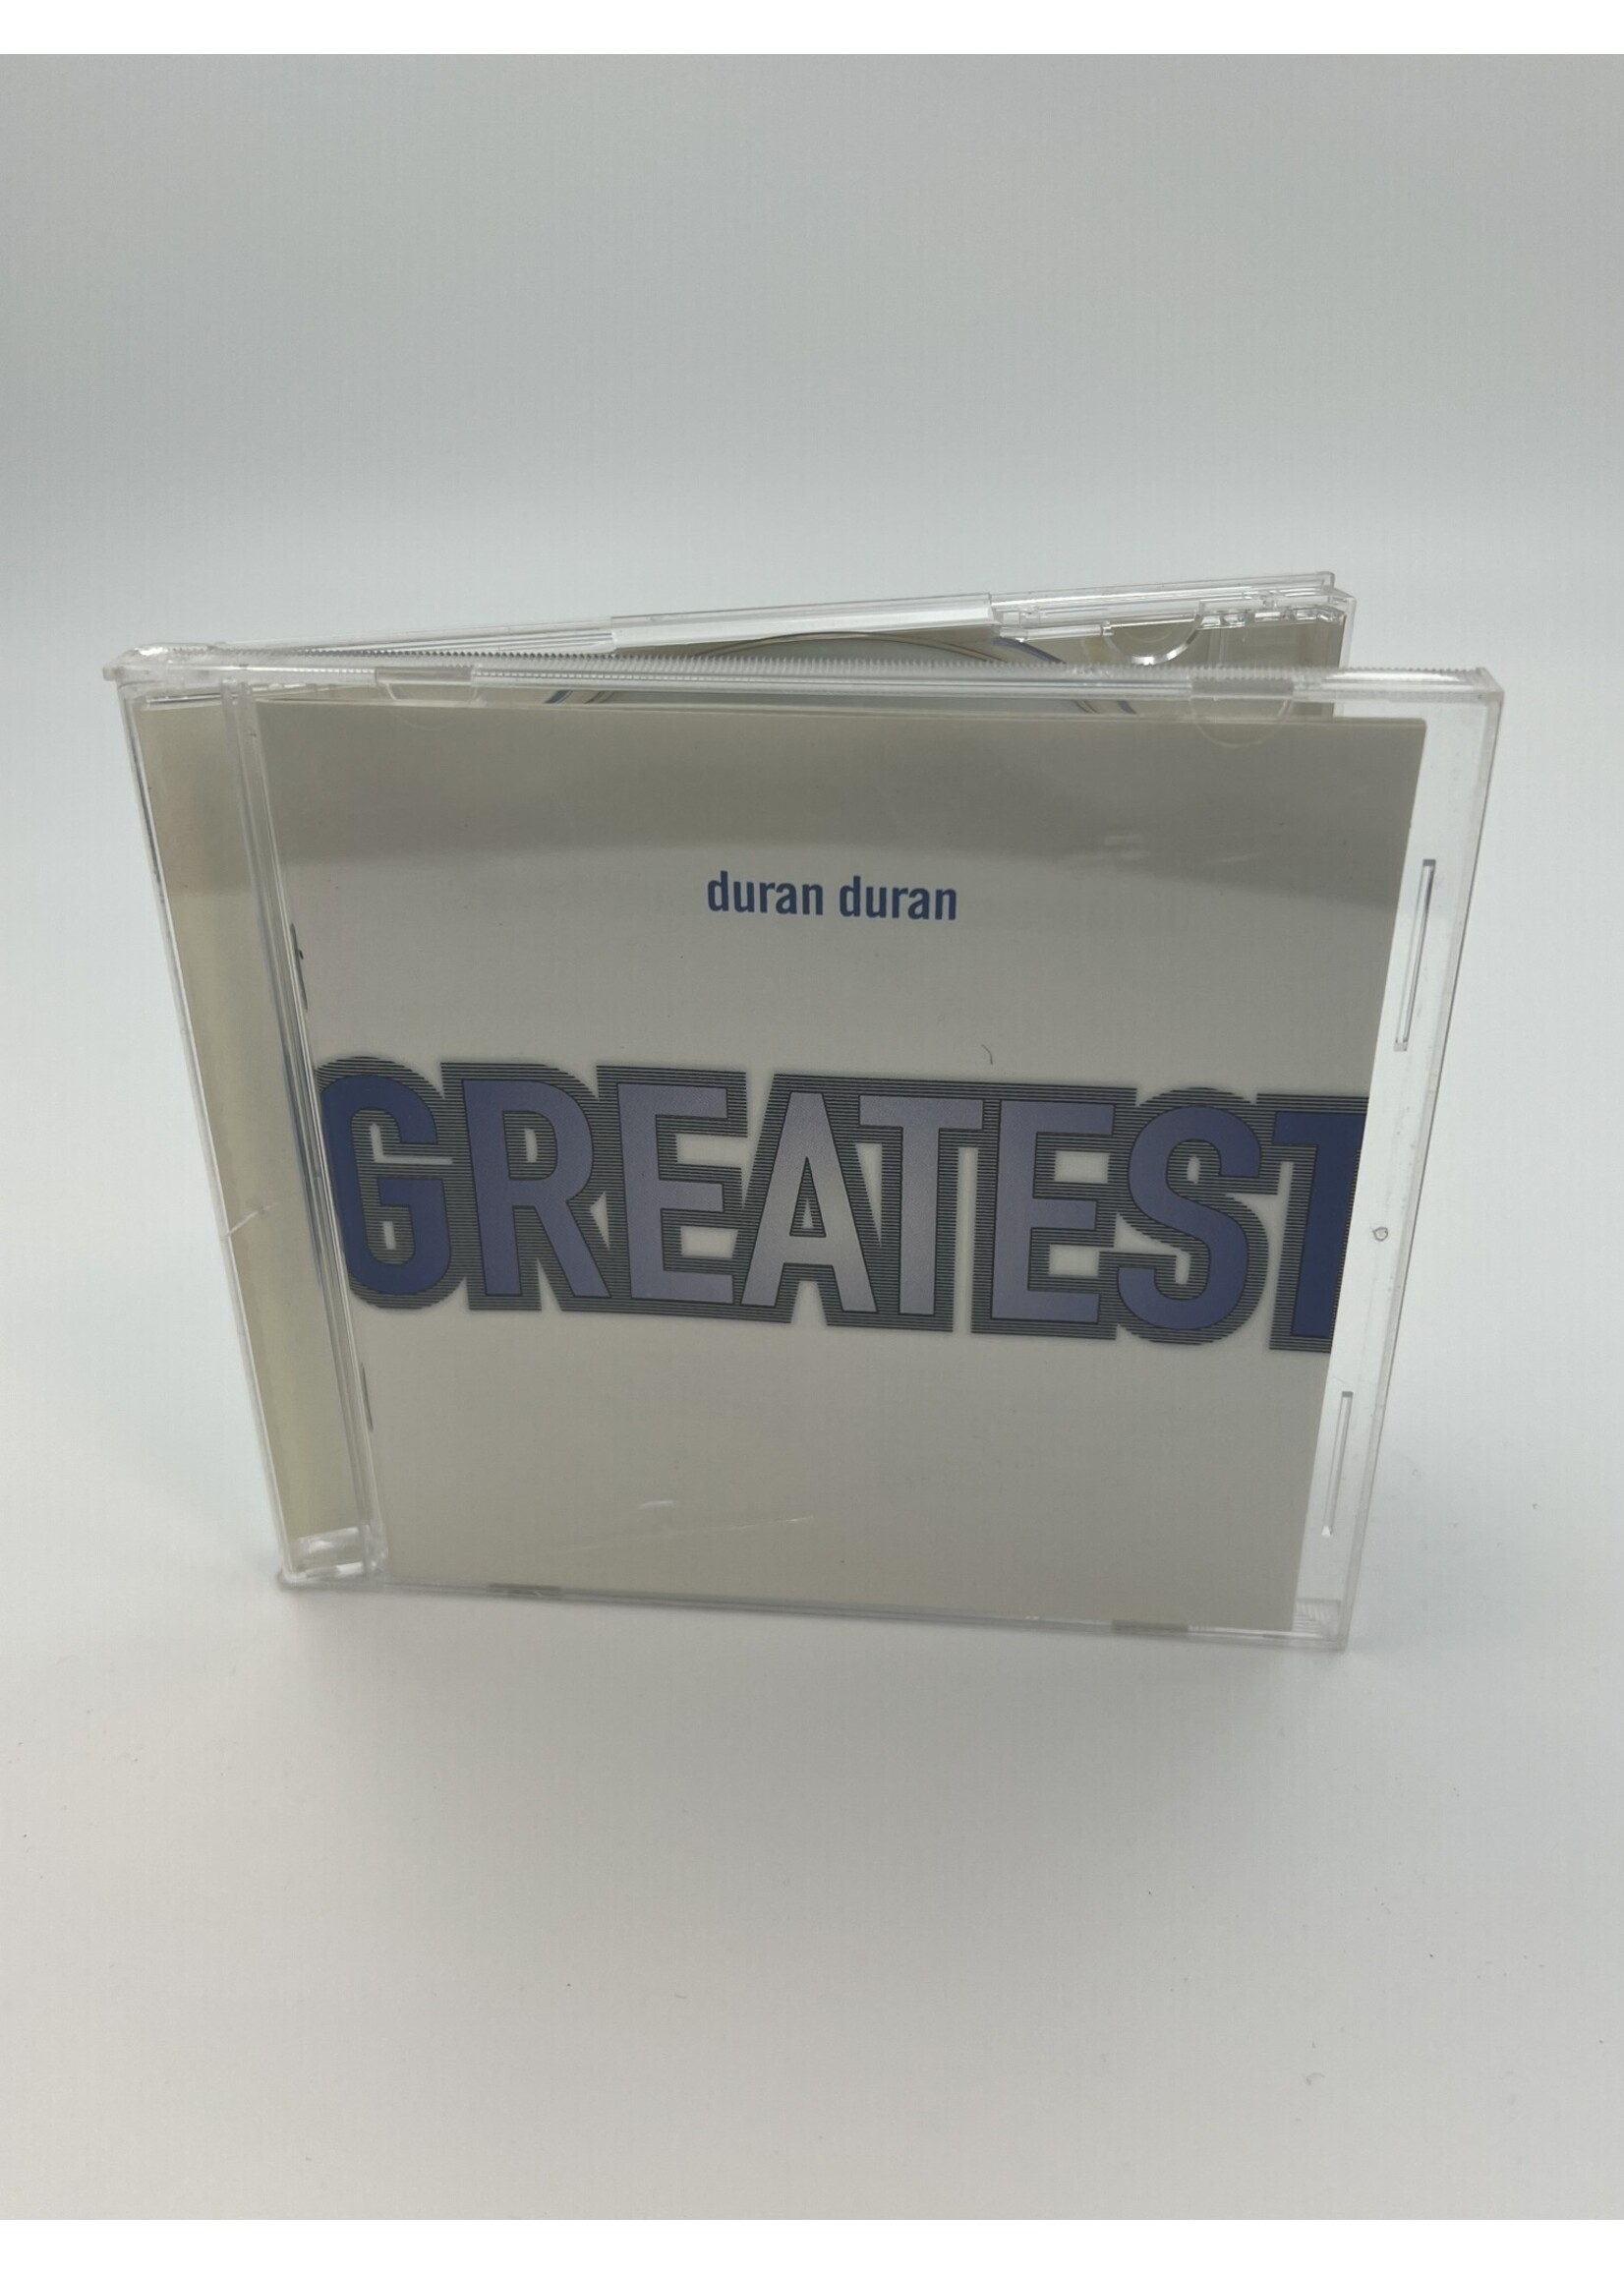 CD Duran Duran Greatest CD